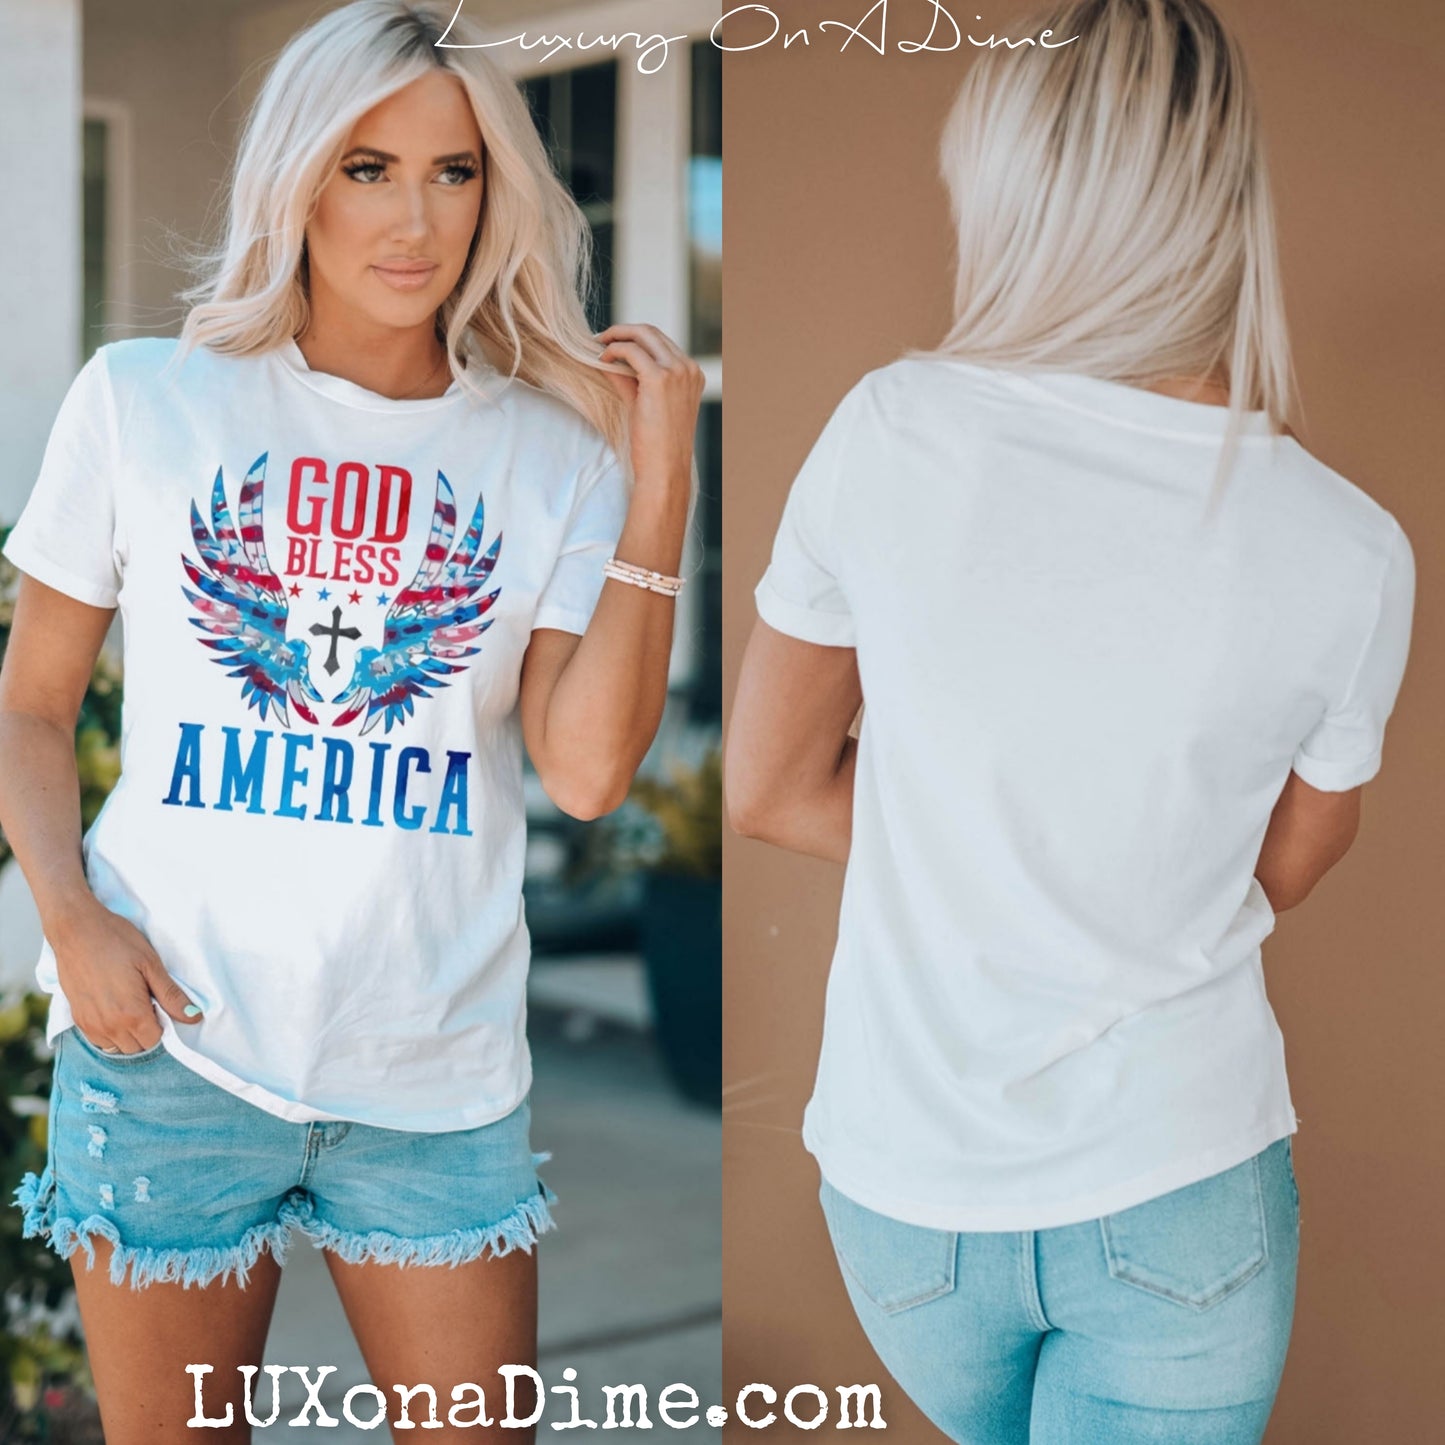 GOD BLESS AMERICA Graphic Top Cuffed Short Sleeve Tee Shirt